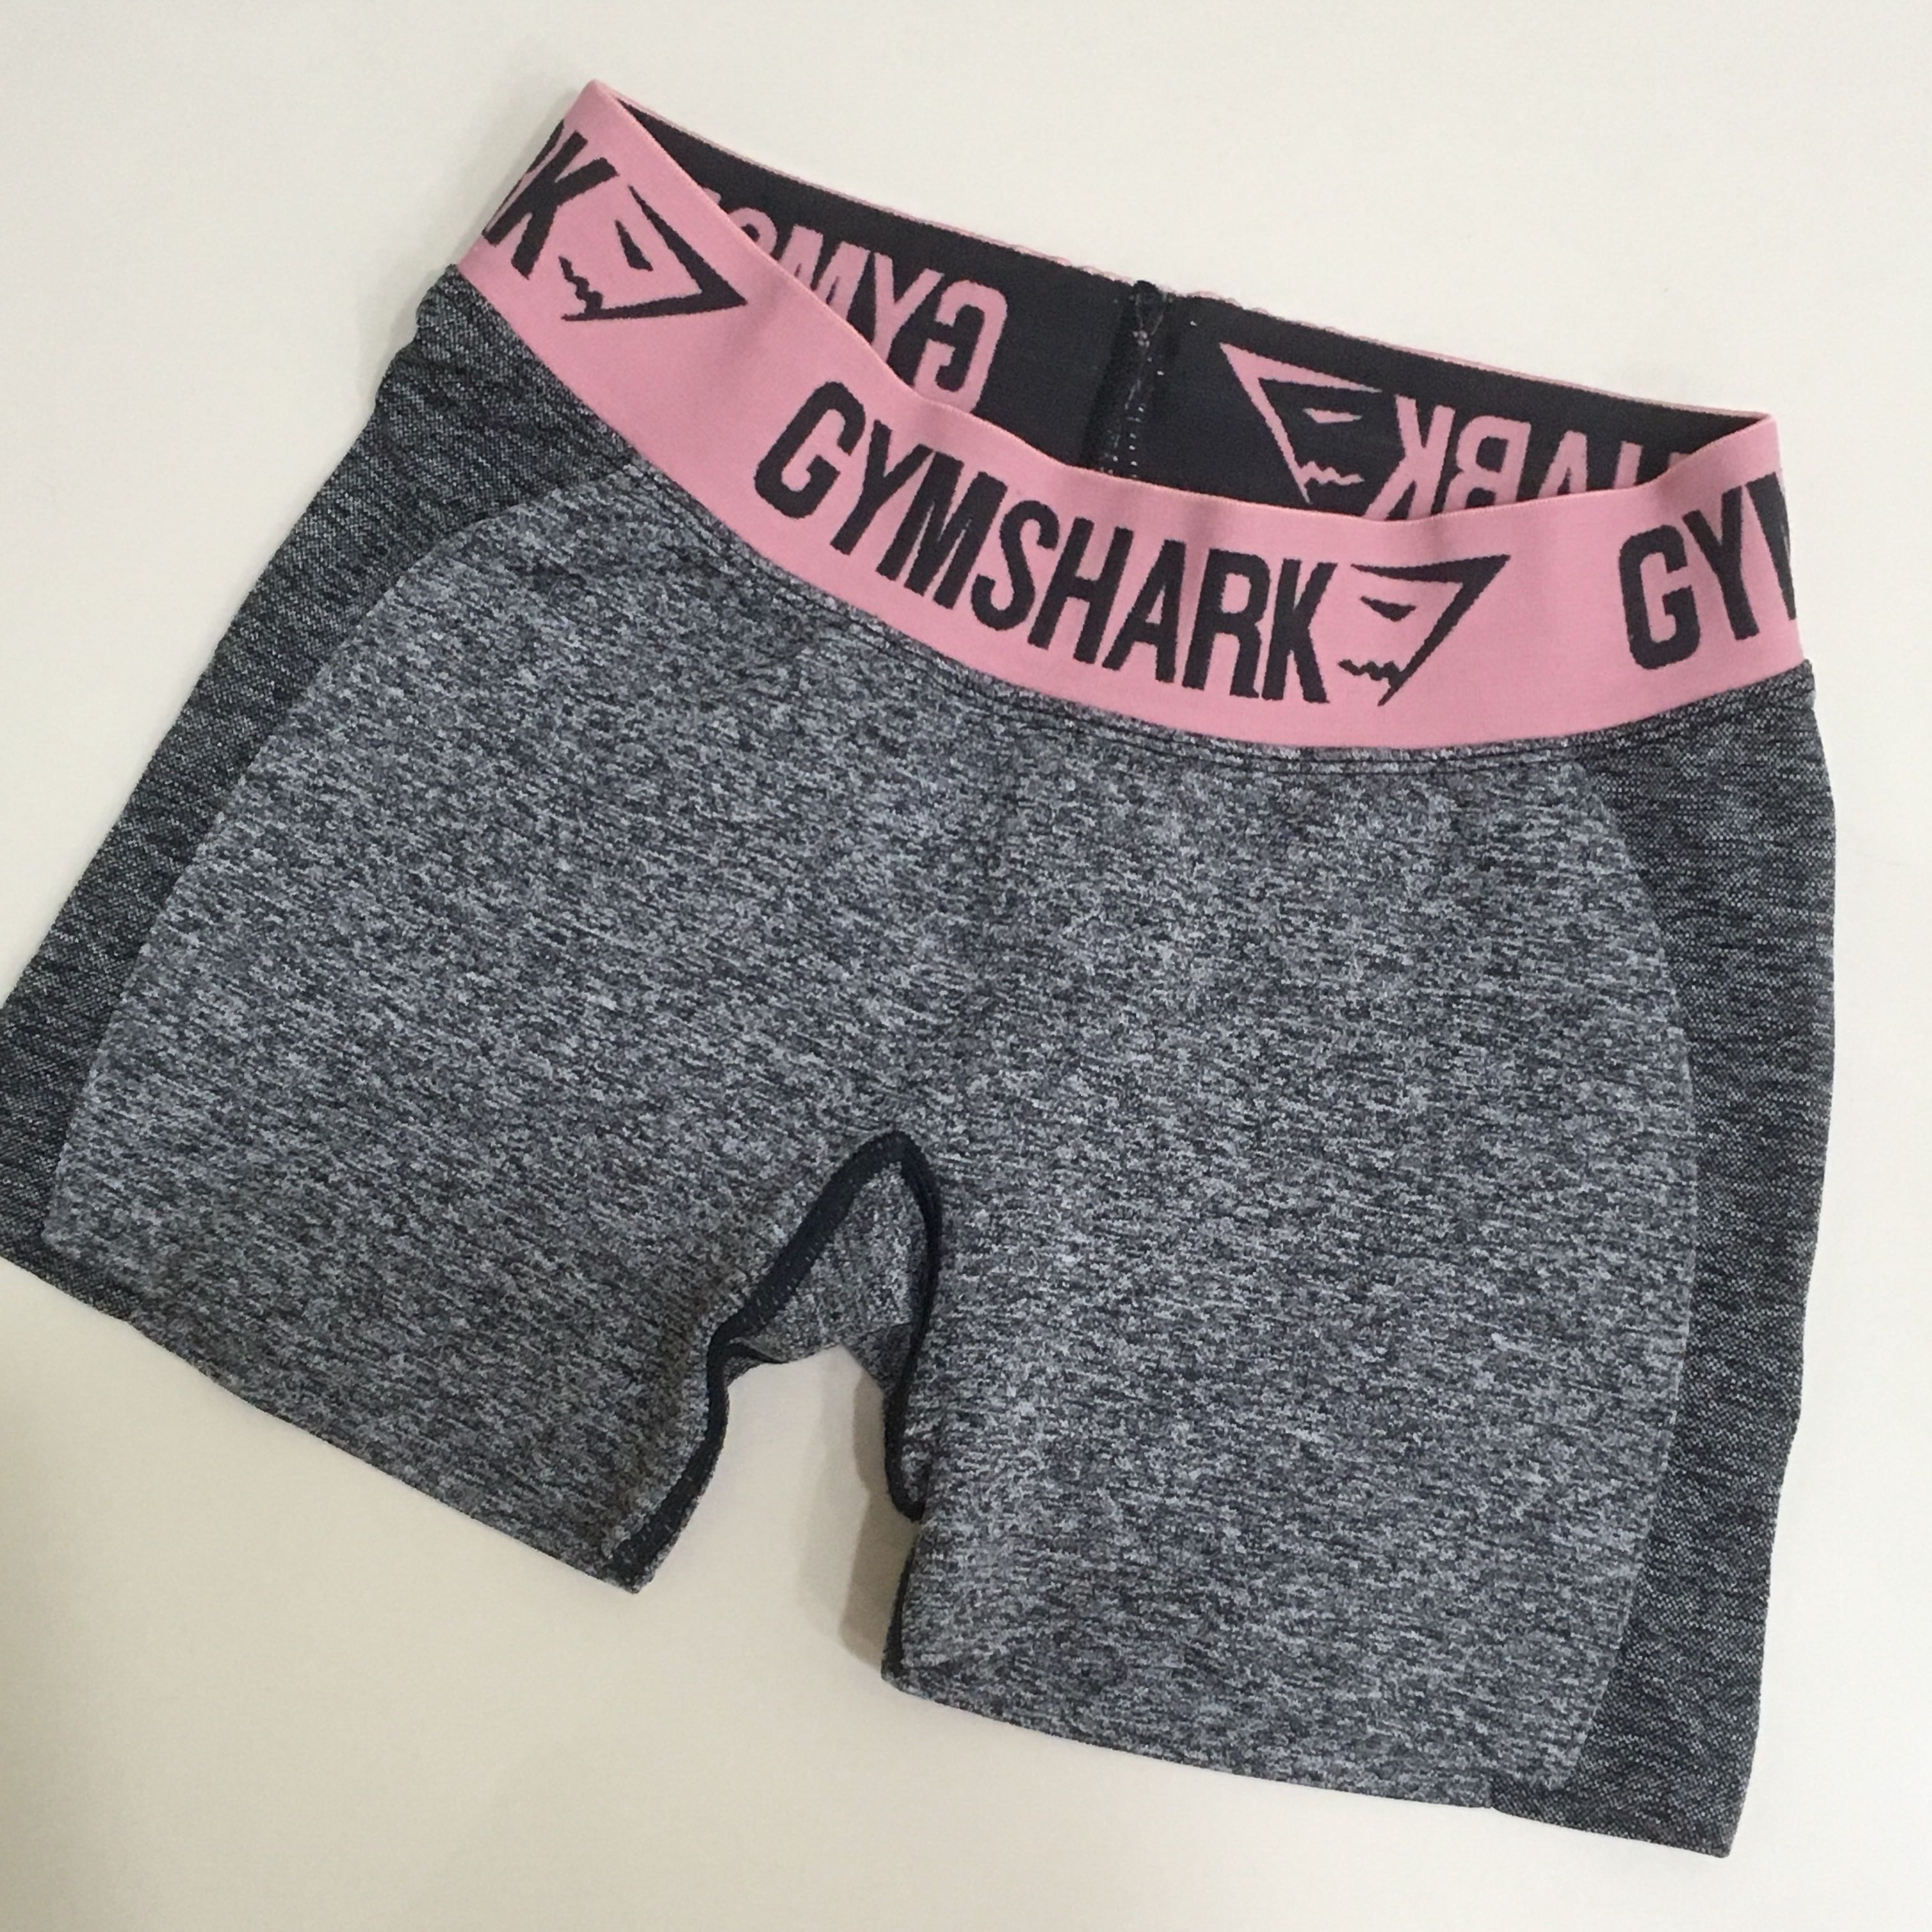 Gymshark Flex Shorts - Charcoal Marl